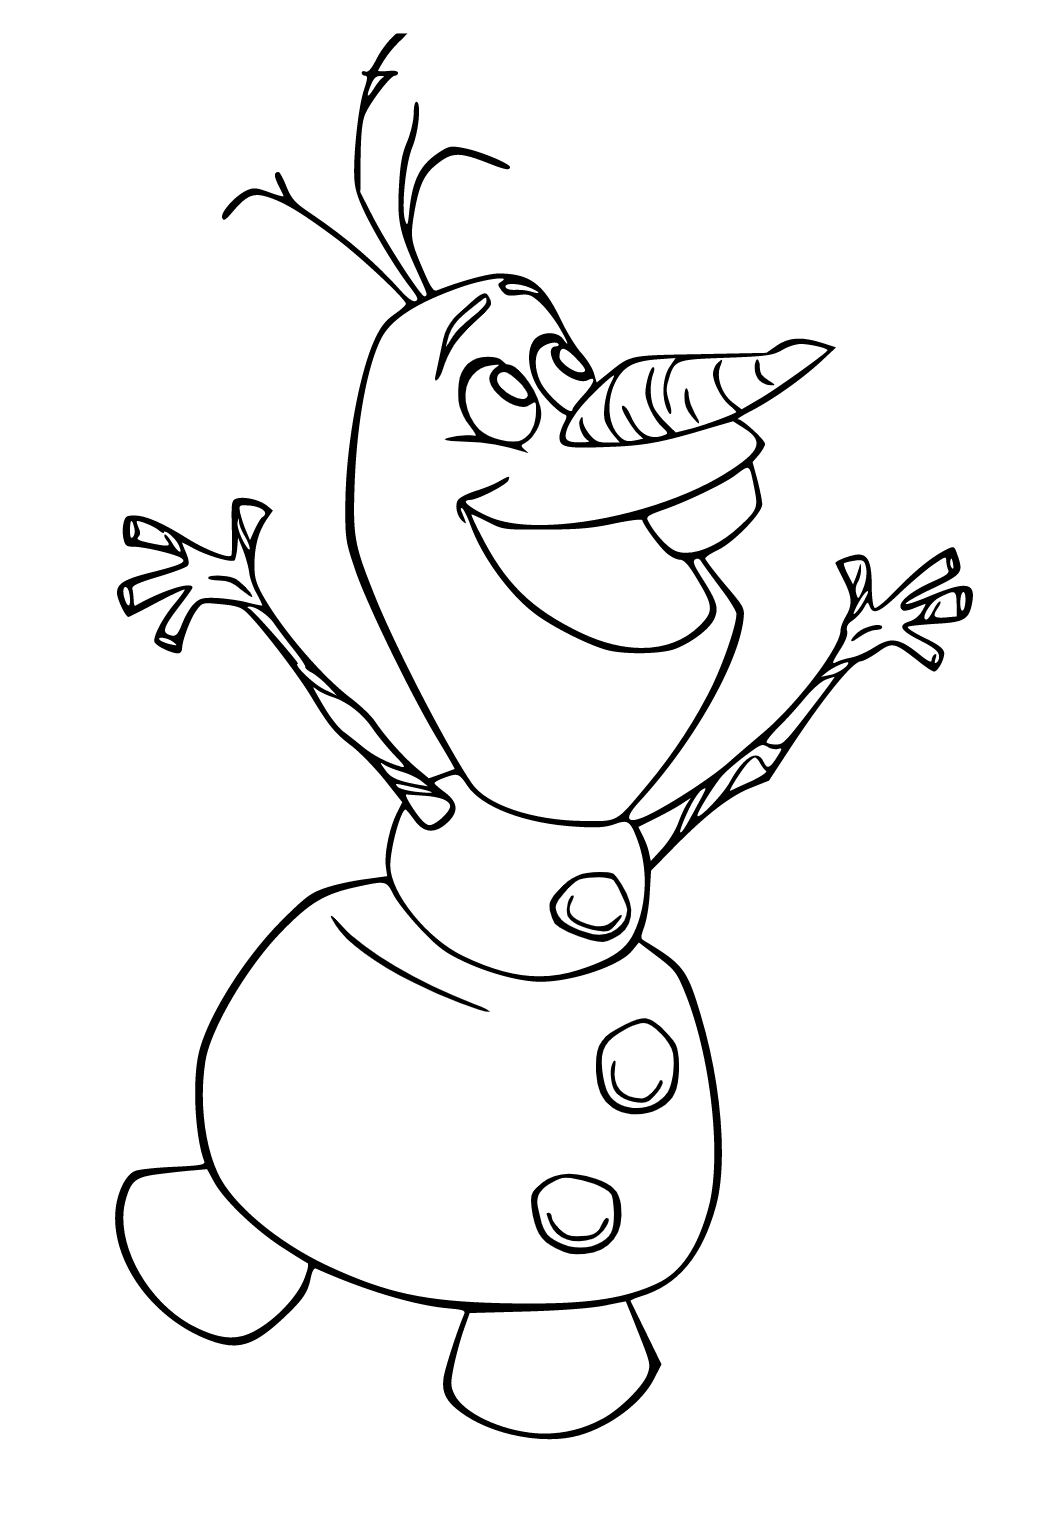 Olaf - Frozen desenho pra colorir